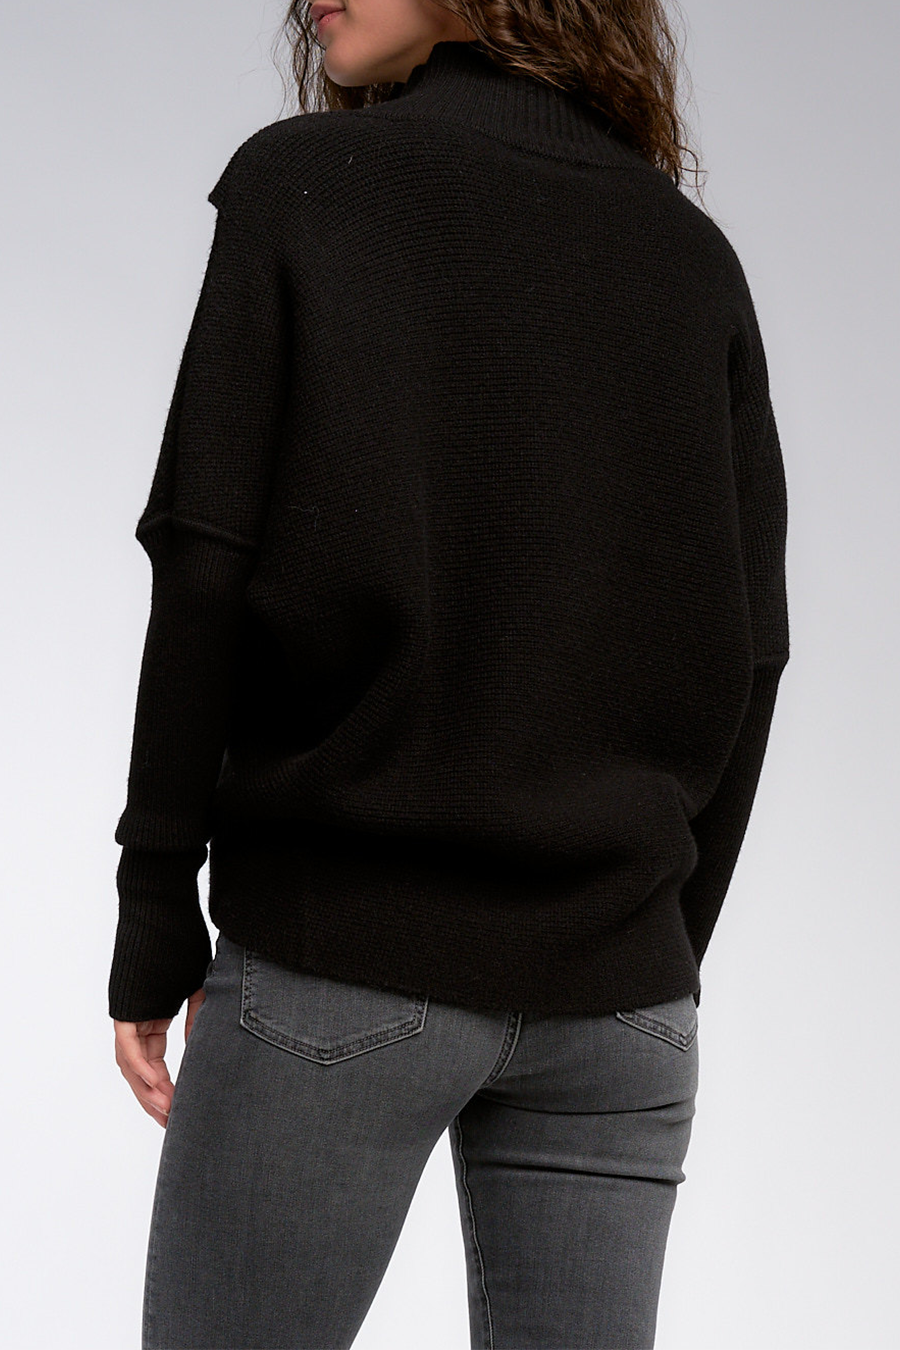 CrossFront Sweater | Black - Main Image Number 3 of 3